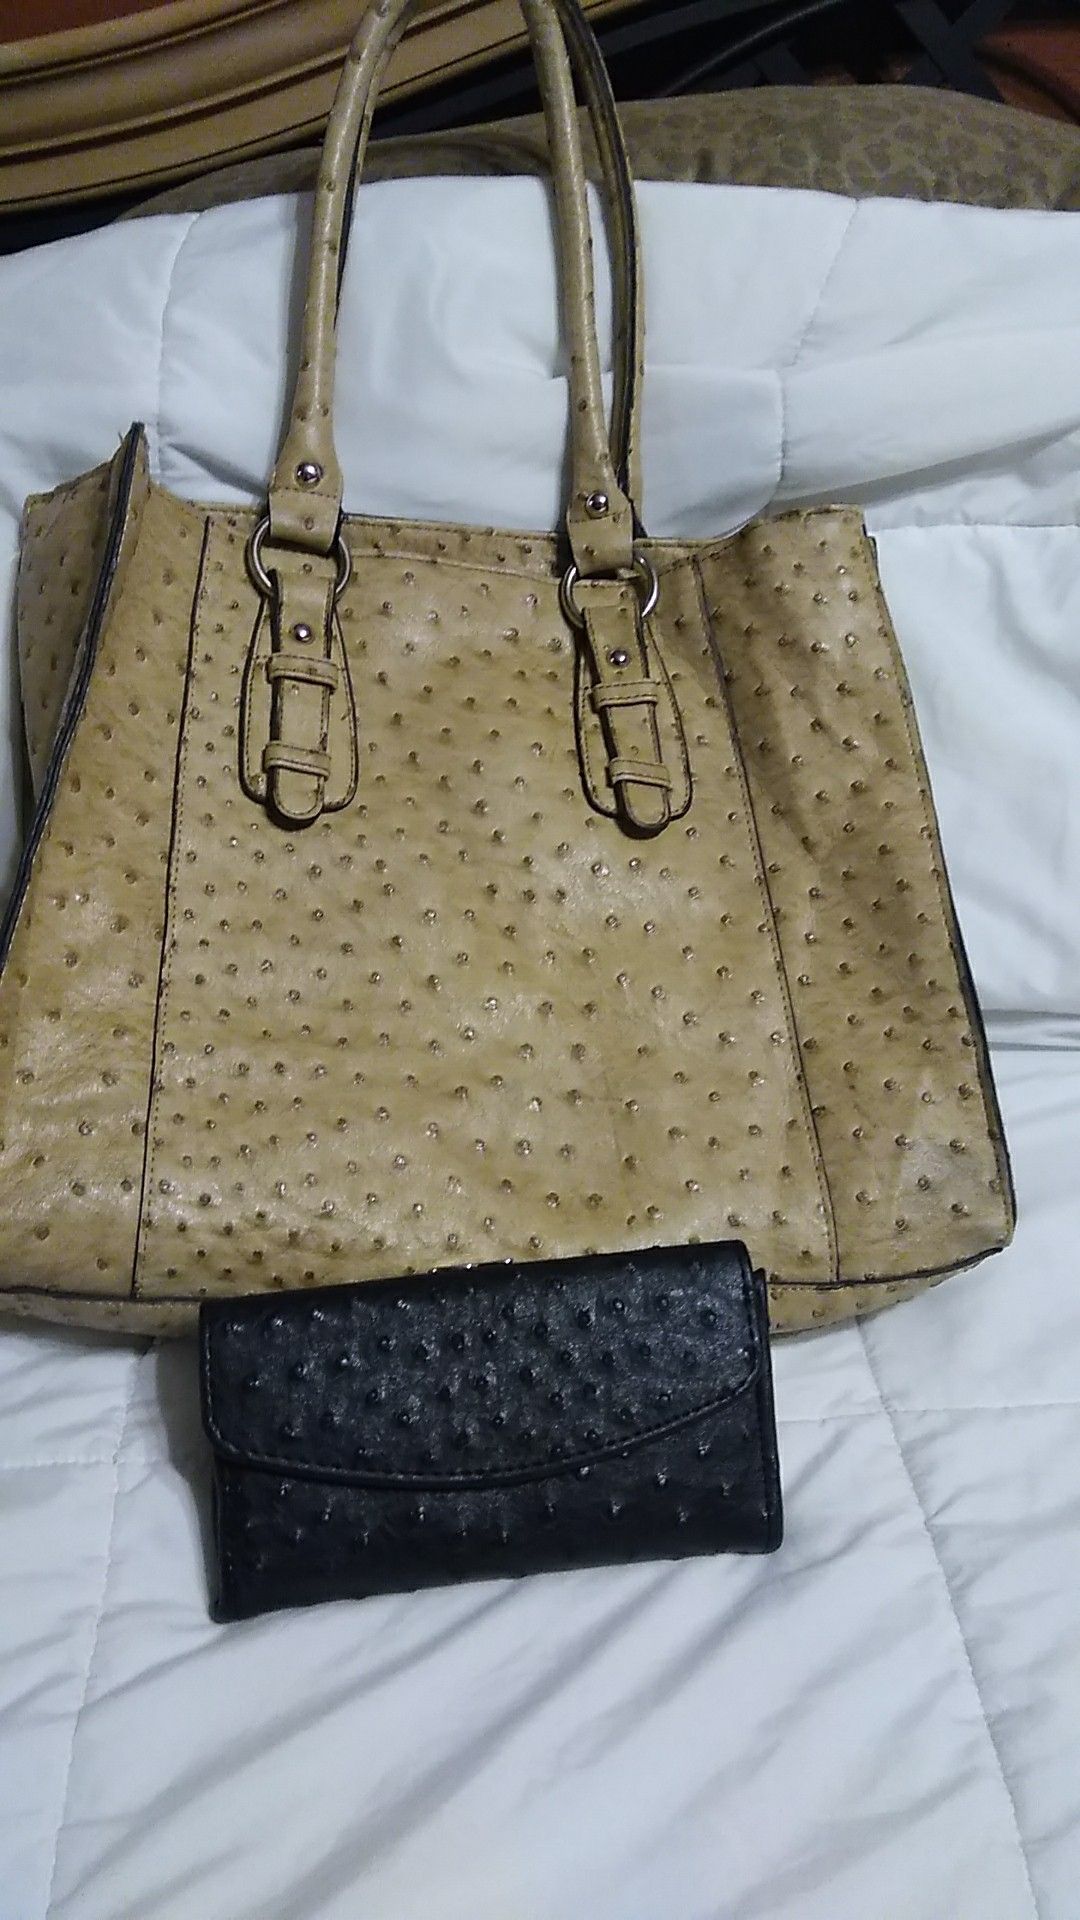 Merona purse and wallet